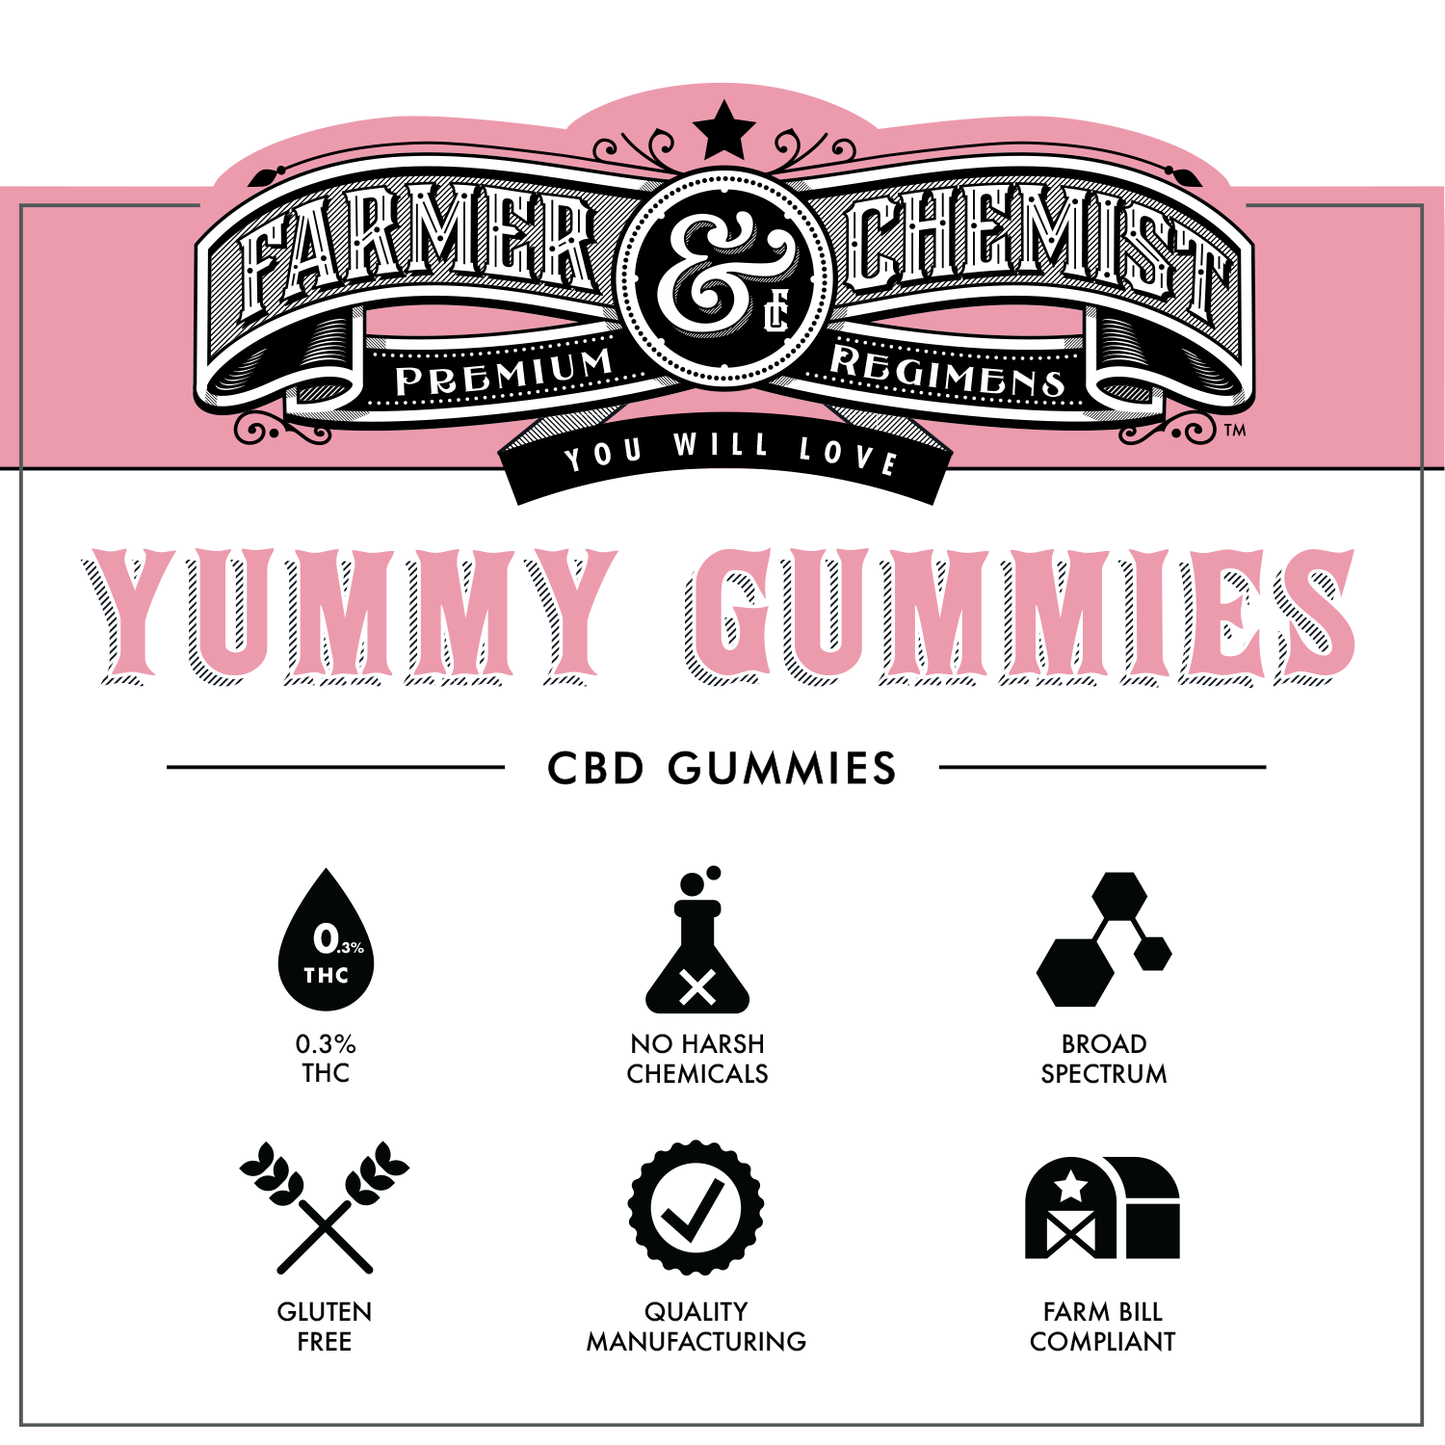 YUMMY GUMMIES - 24ct 28mg CBD/5mg CBG Gummies (boîte de 4)